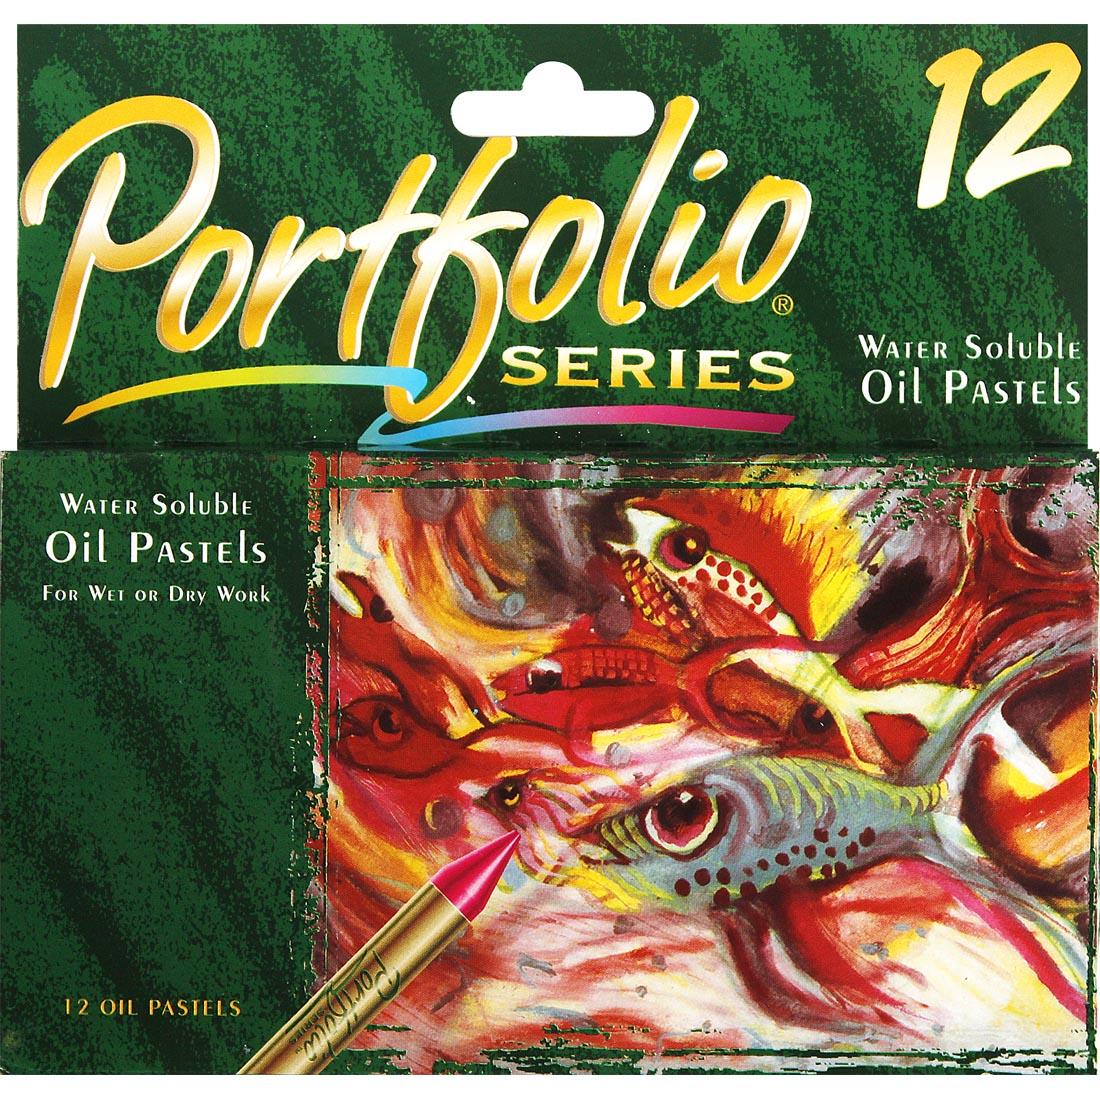 Crayola Portfolio Series Water Soluble Oil Pastels 12-Color Set